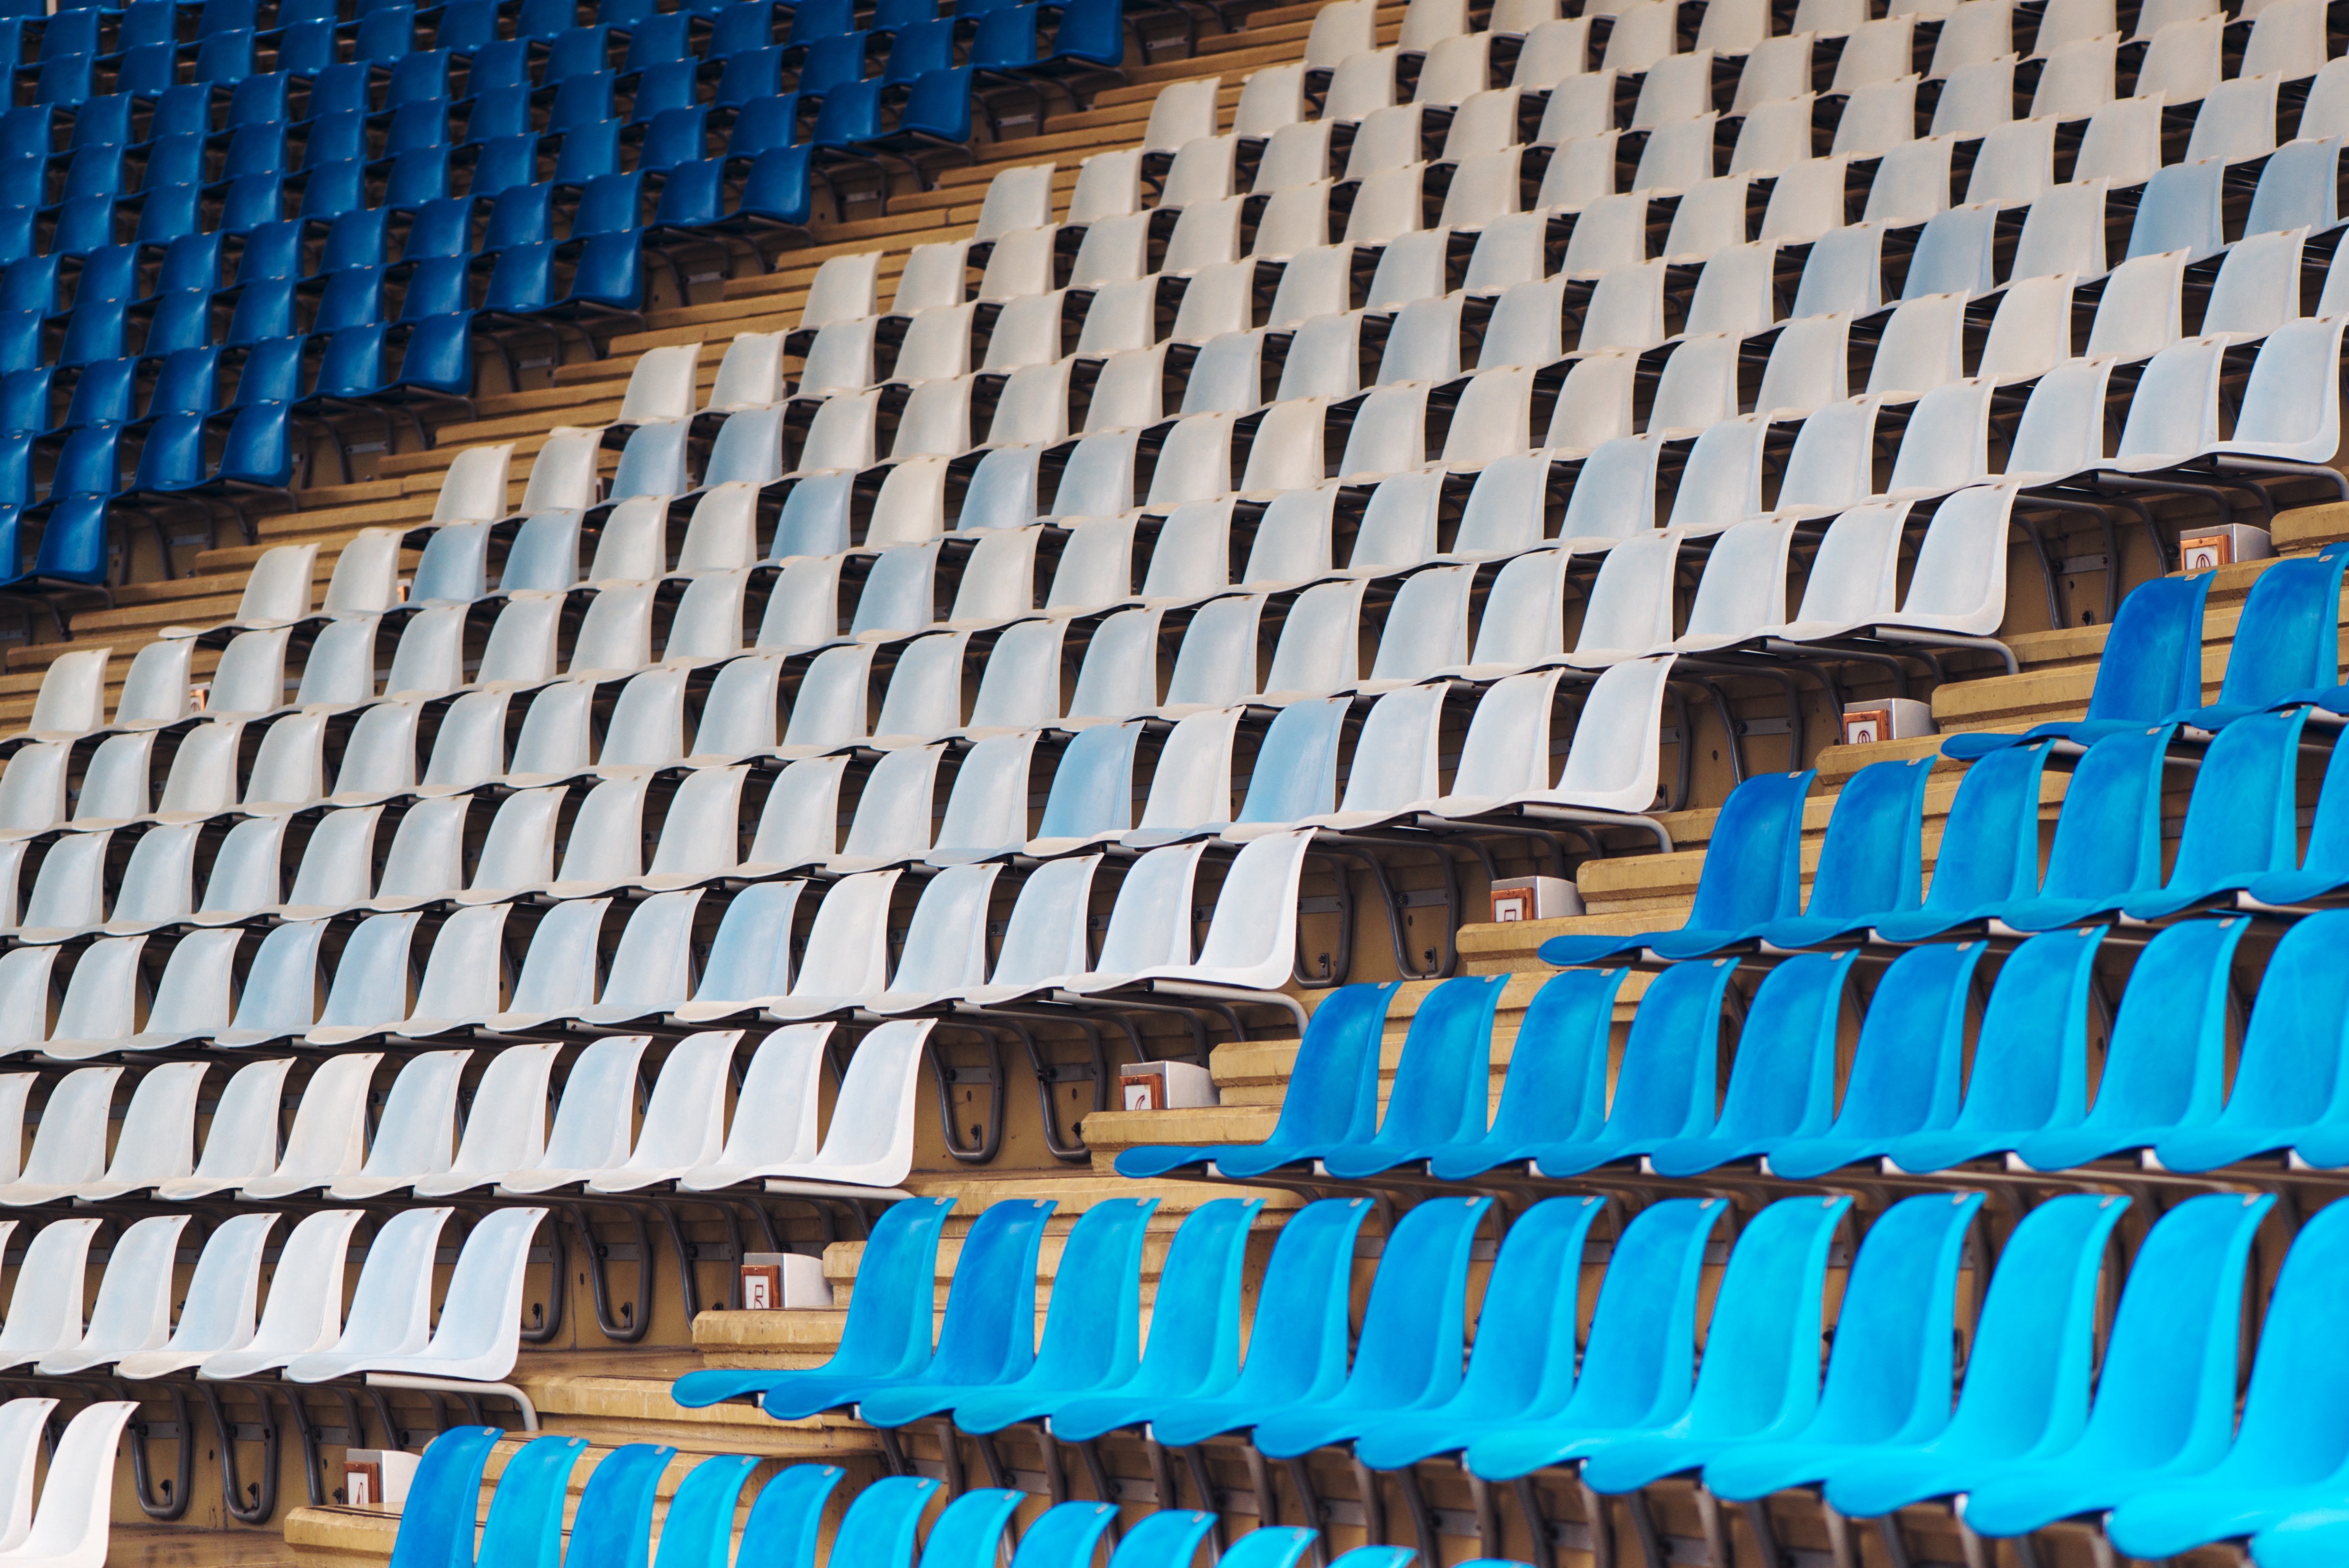 Blue And White Plastic Stadium Seats 2021 08 26 23 02 46 Utc 